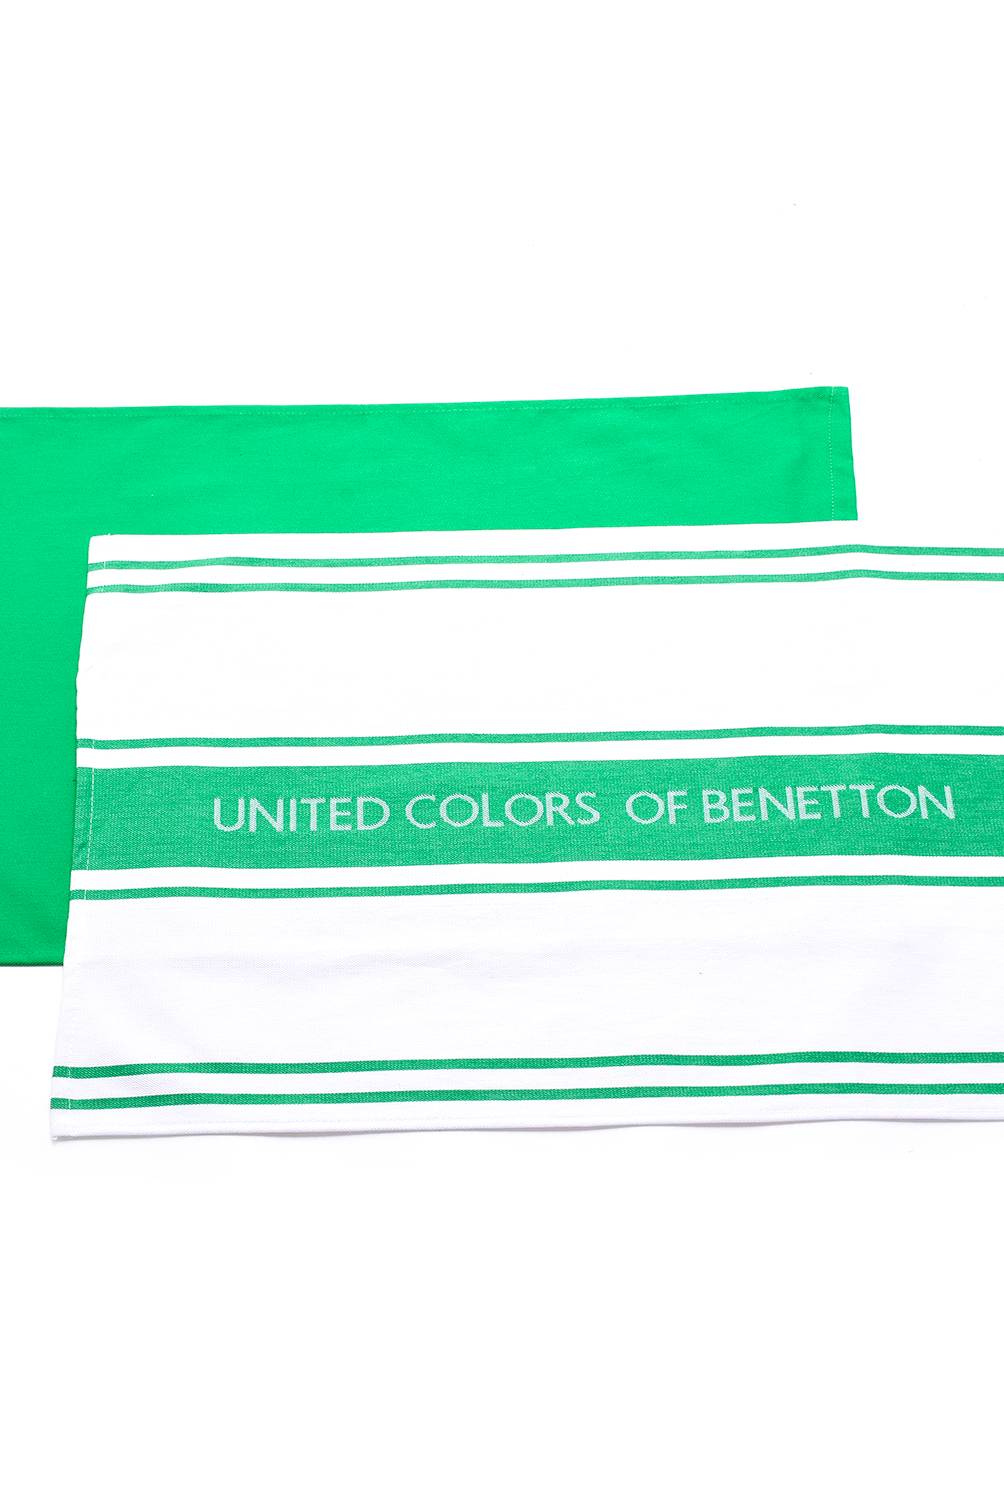 Benetton - Juego de Limpiones Franja Verde